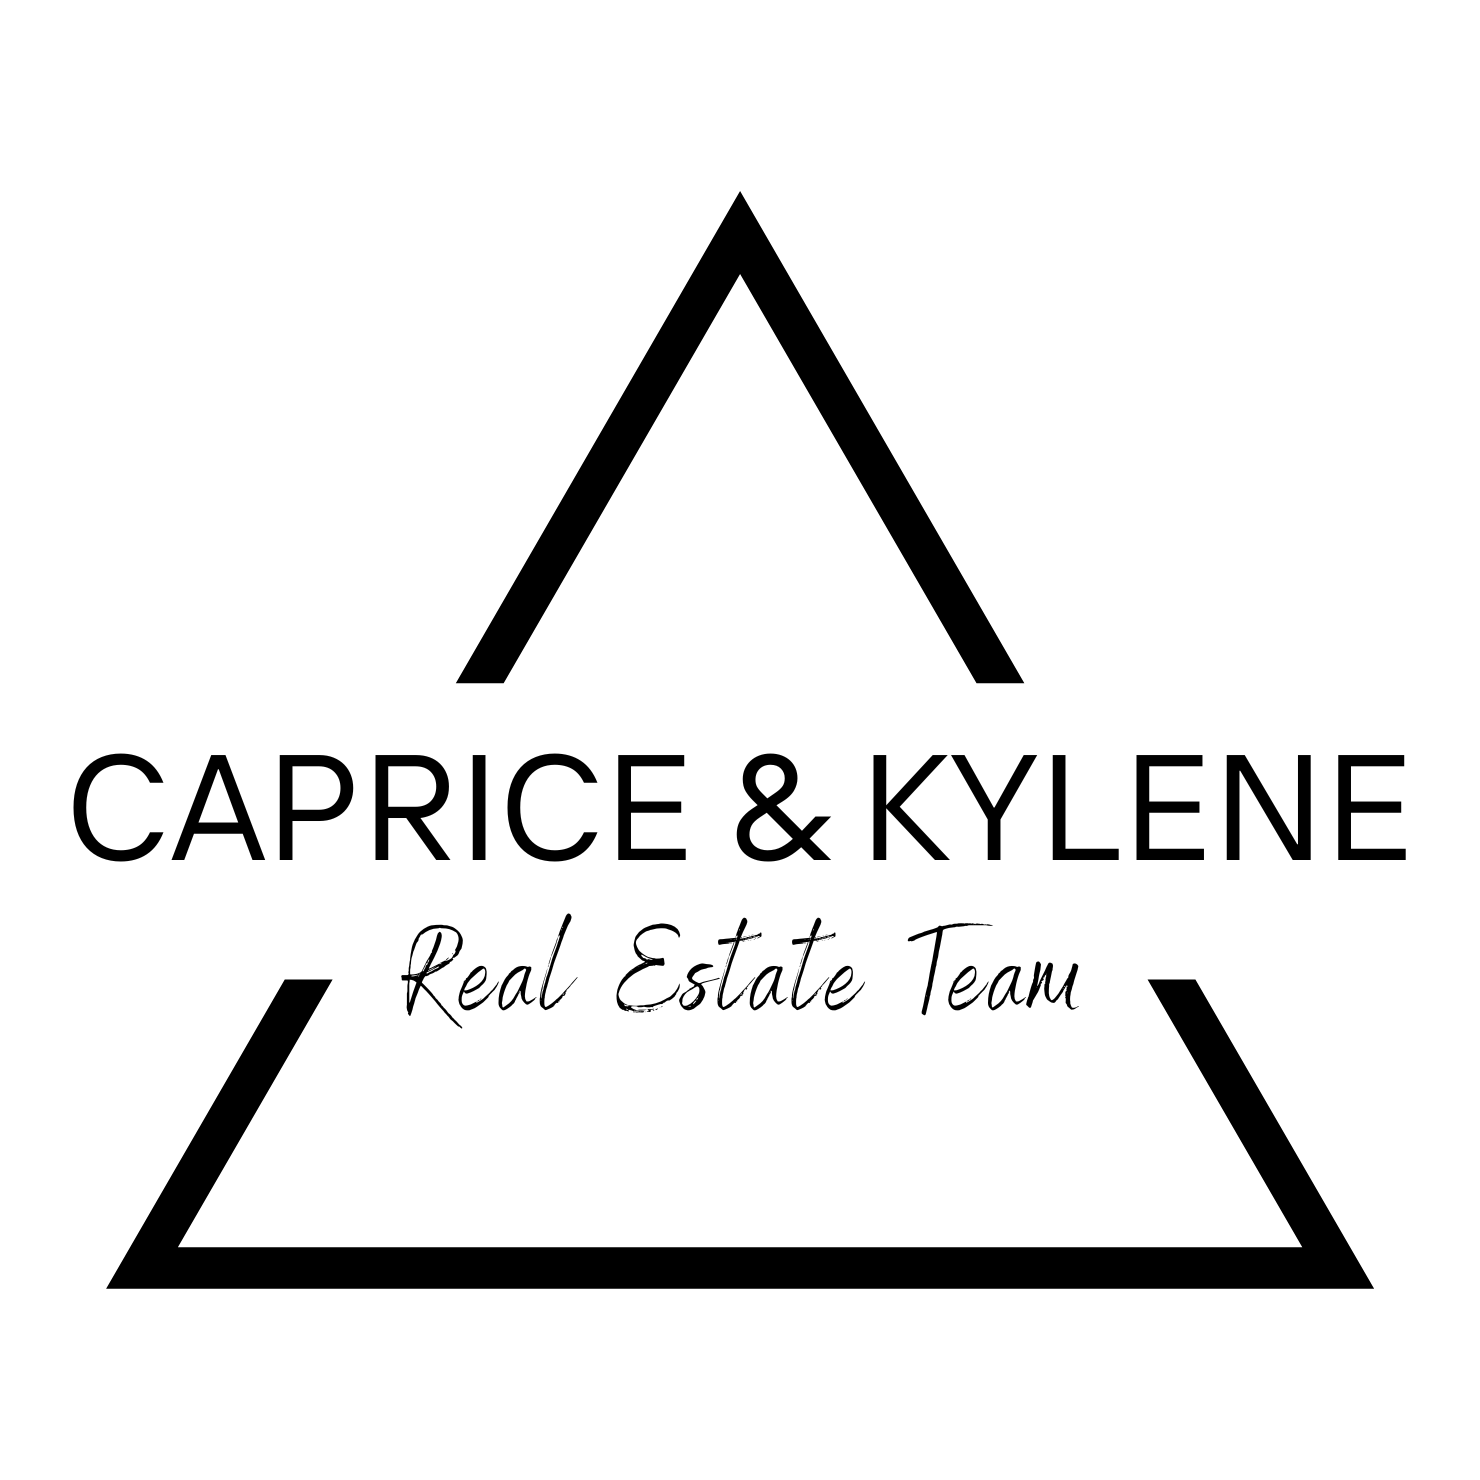 Caprice & Kylene Real Estate Team